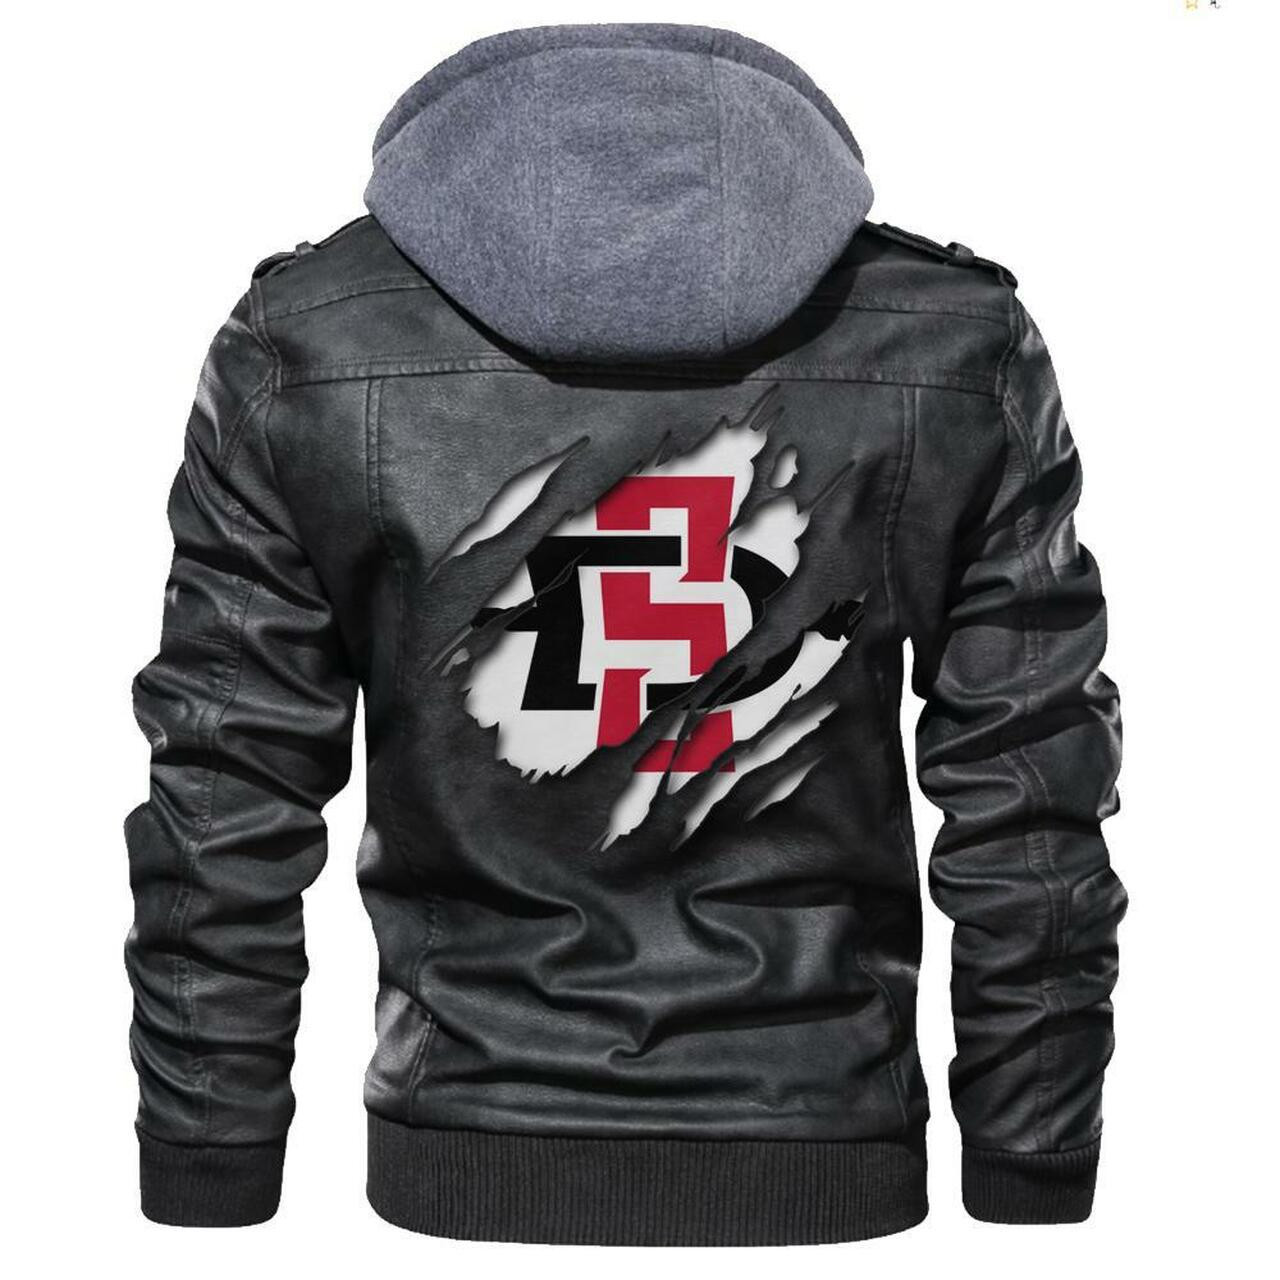 Top leather jacket Sells Best on Techcomshop 82